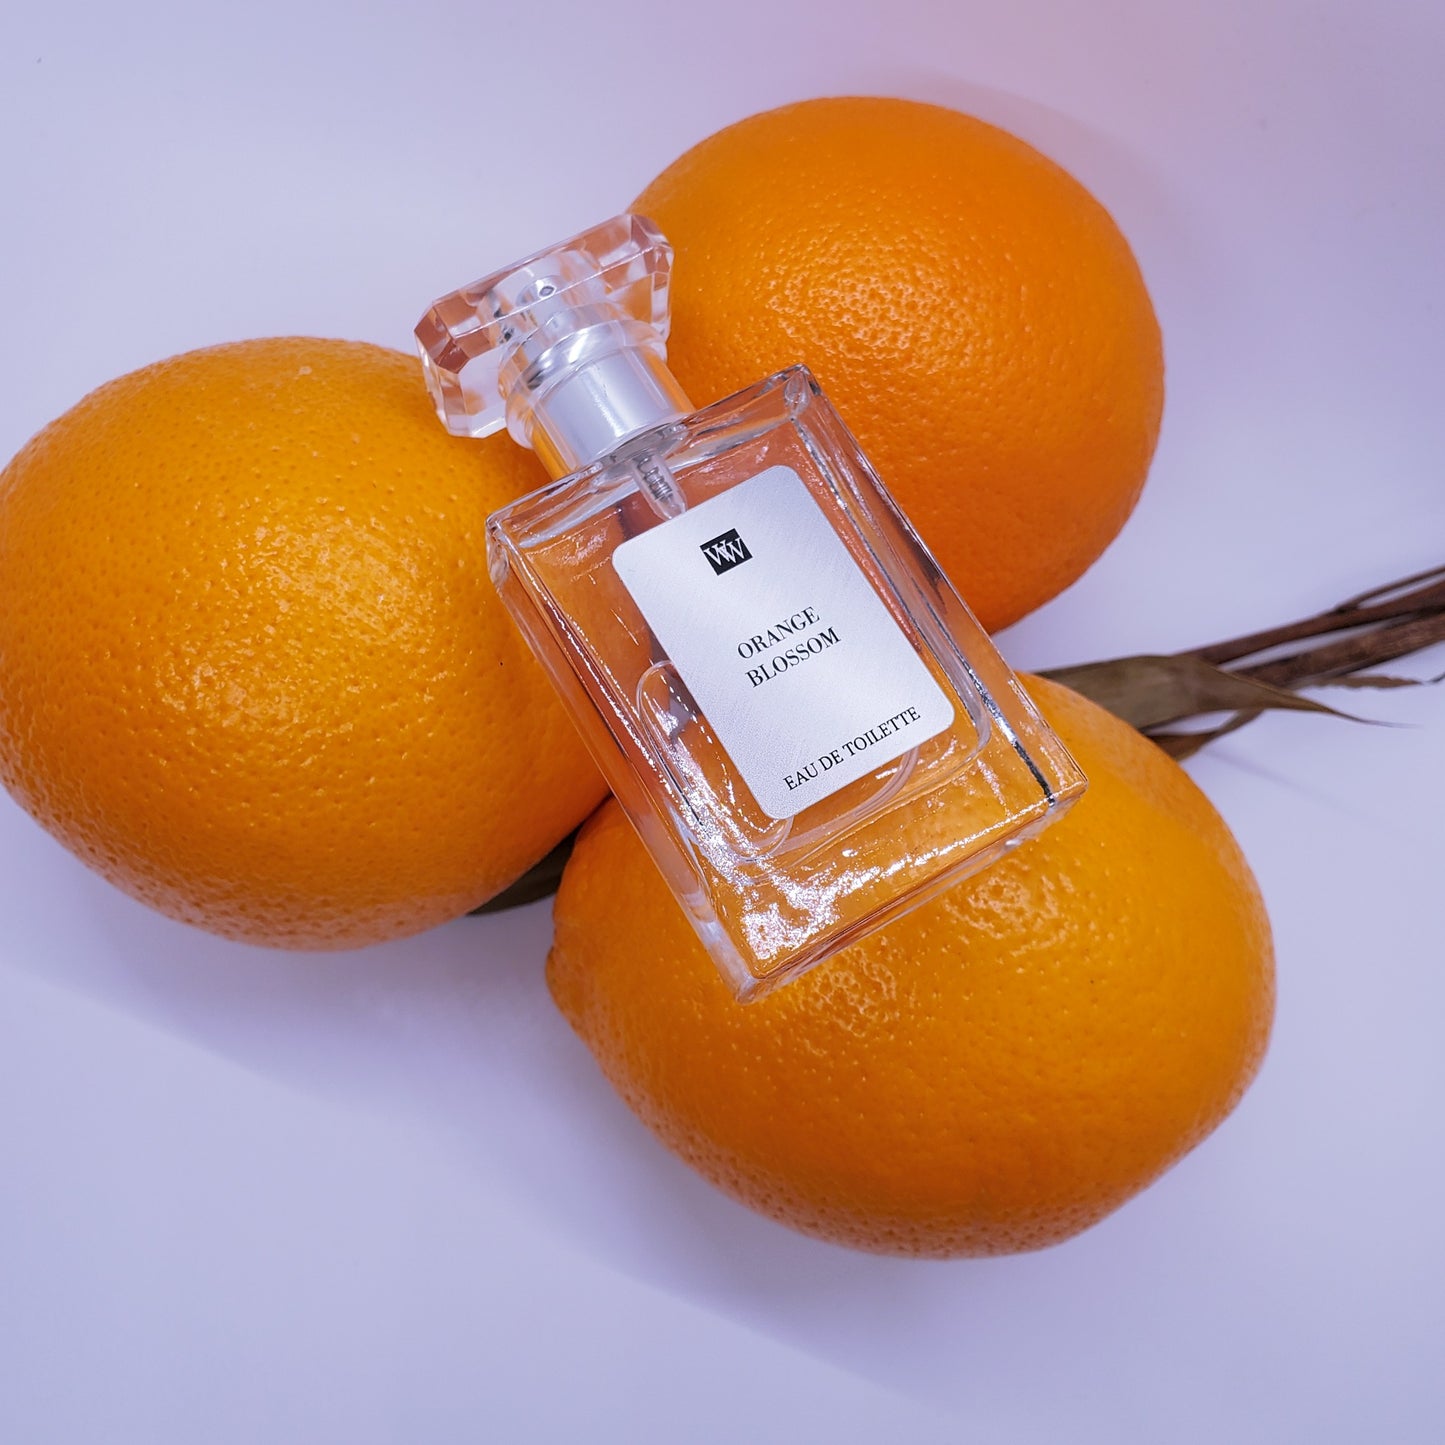 Orange Blossom Perfume | Eau de Toilette